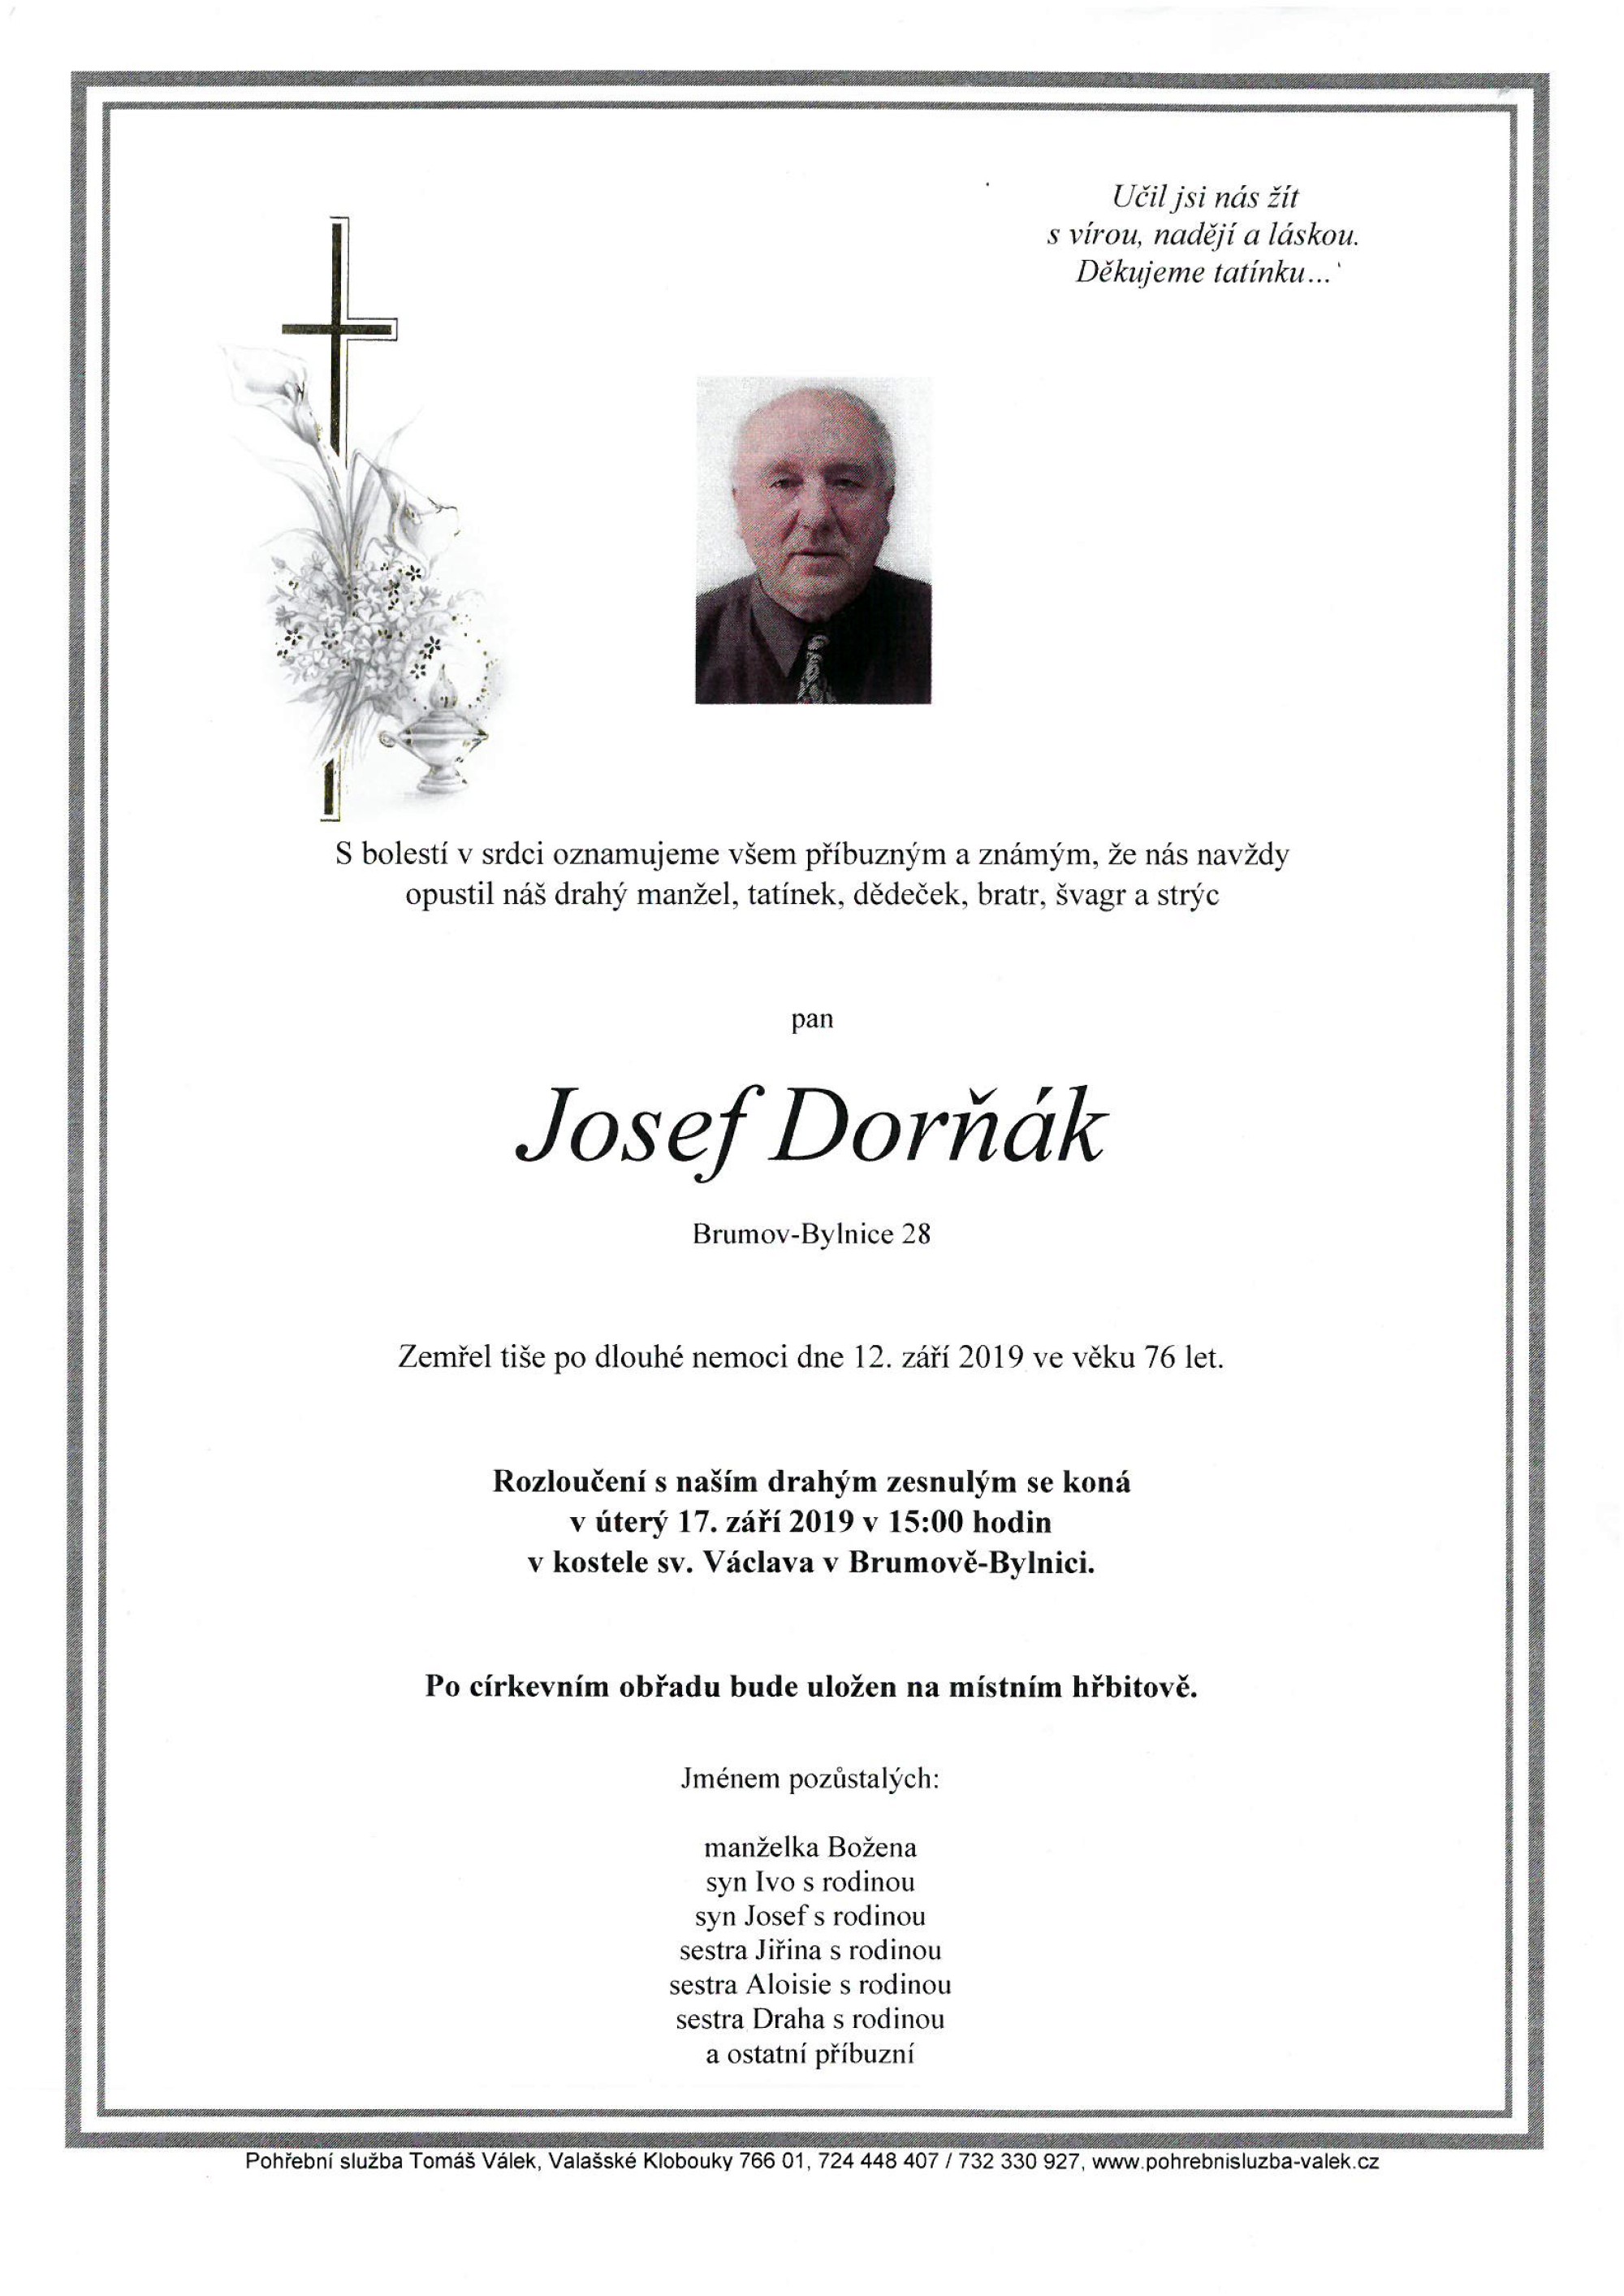 Josef Dorňák